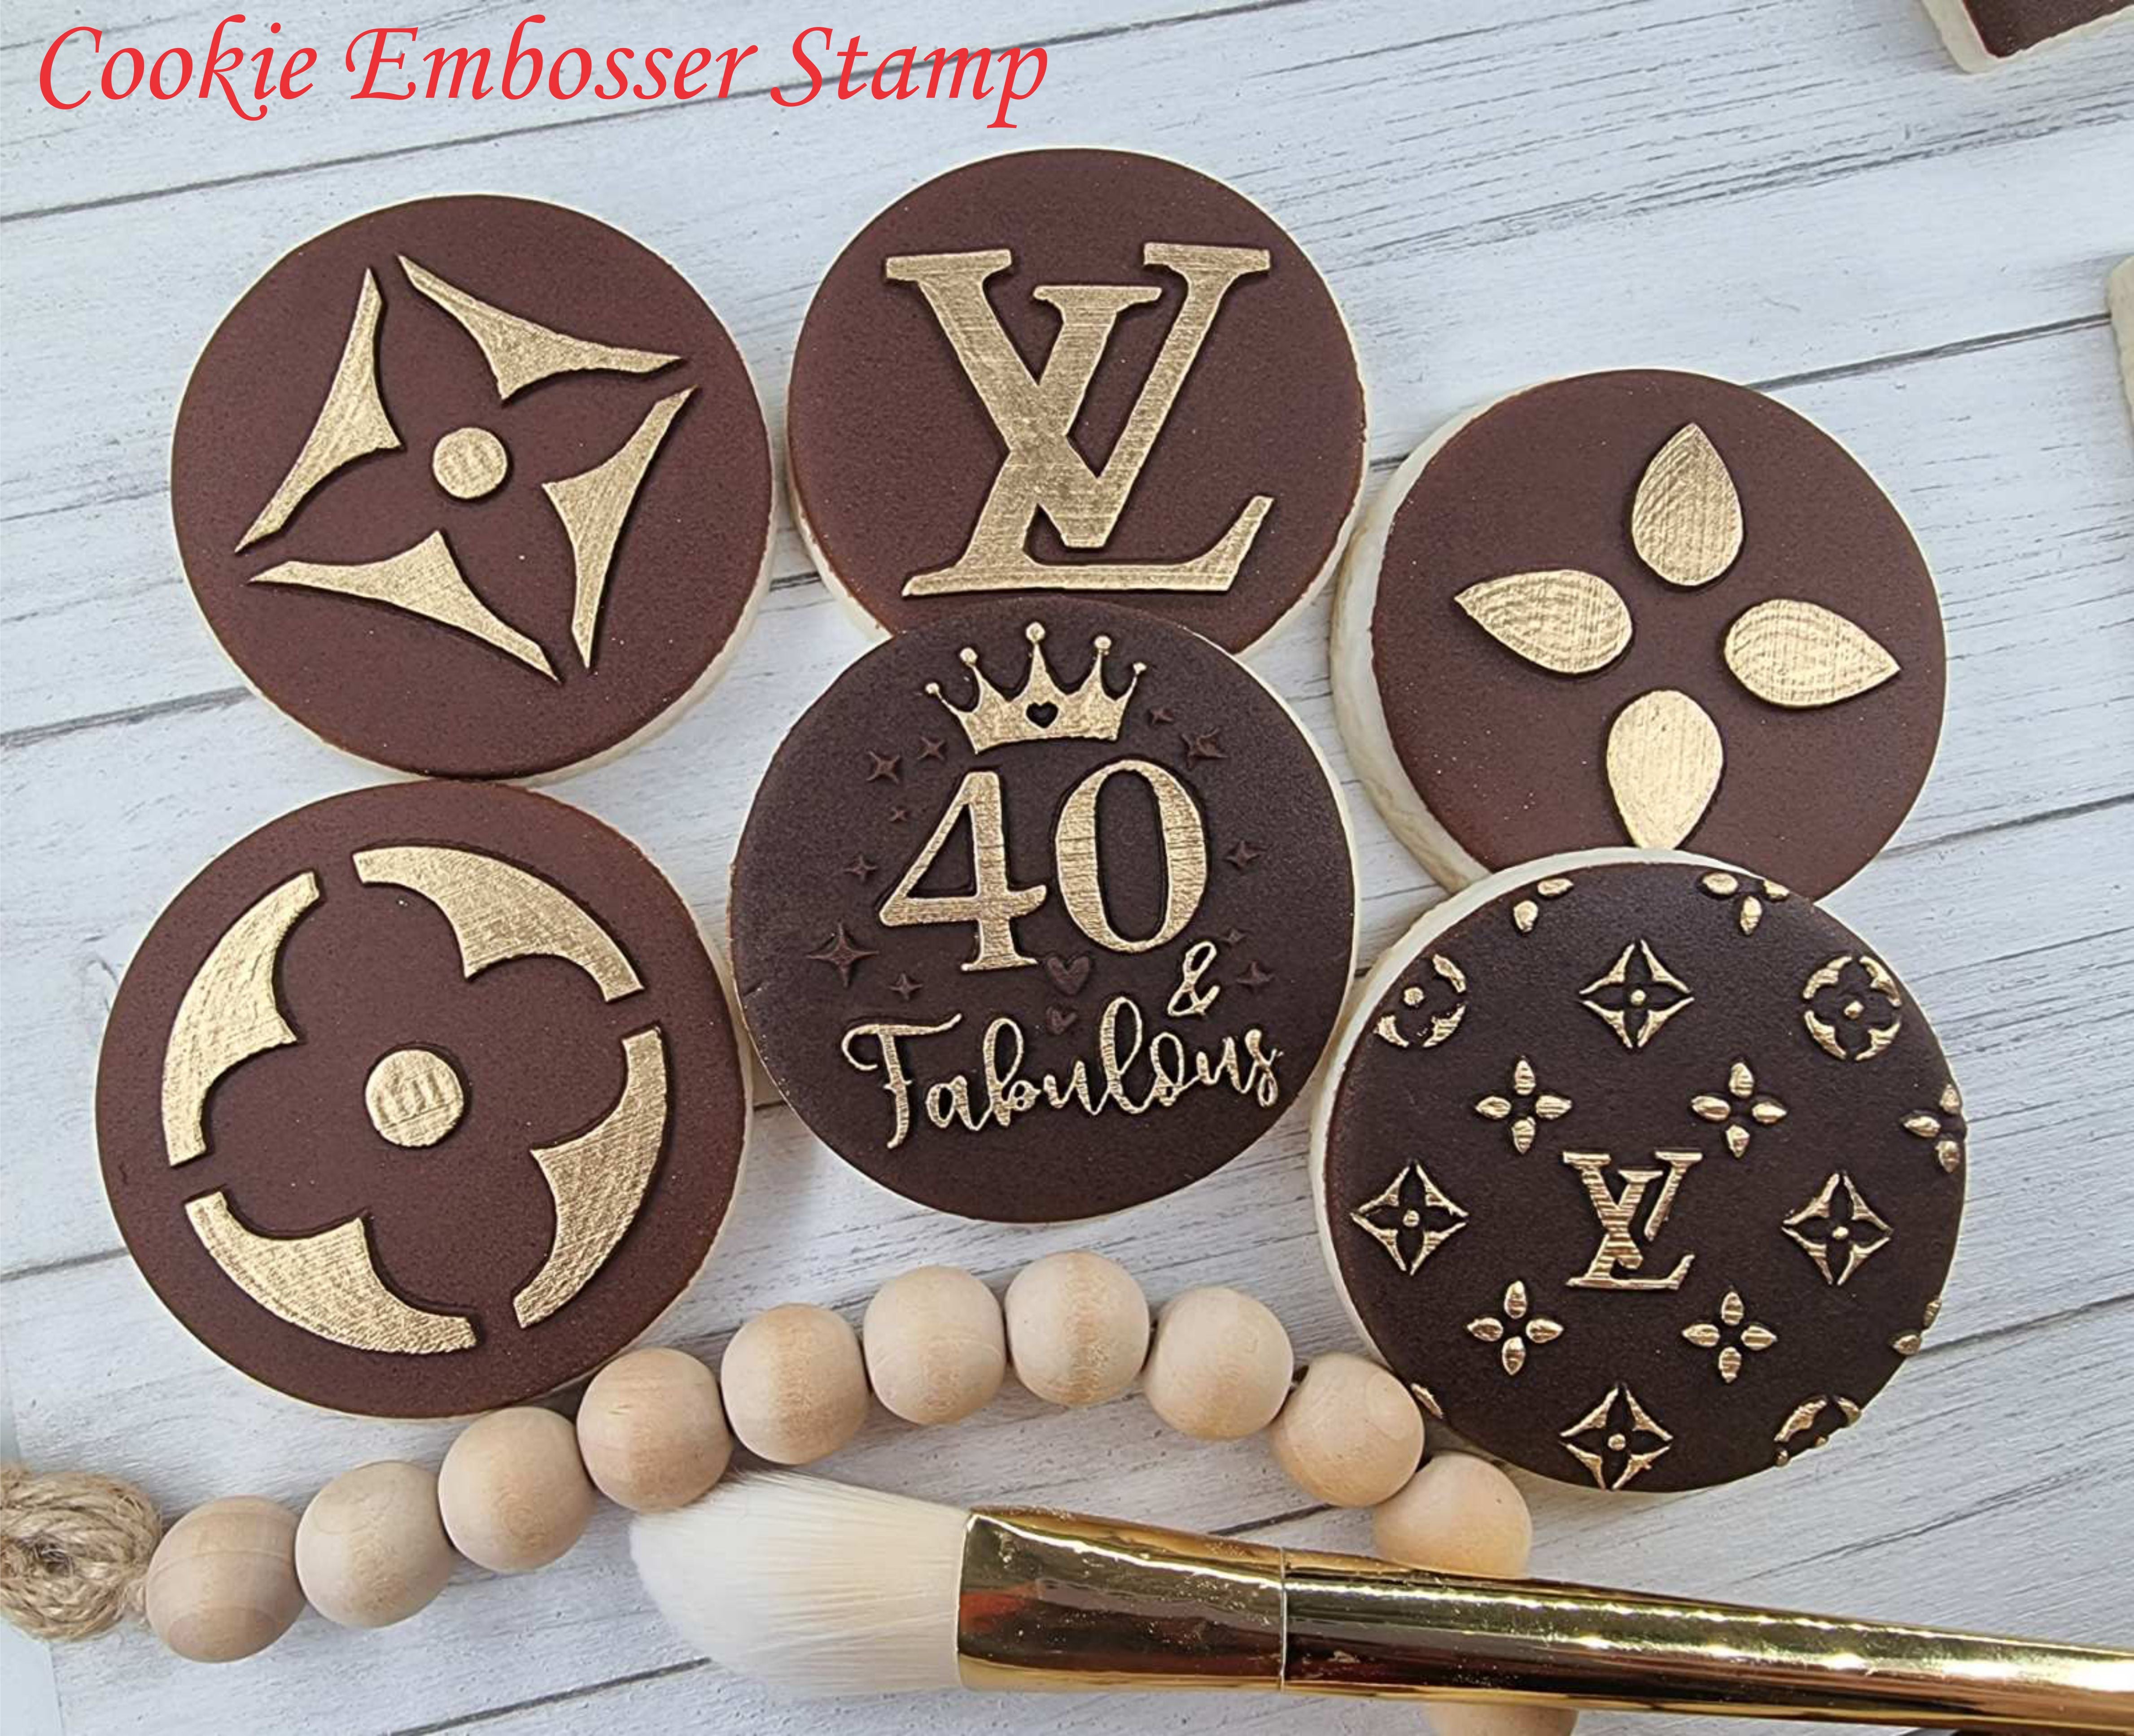 Designer Fondant Stamp Cookie Embosser Stamp LV Cookies